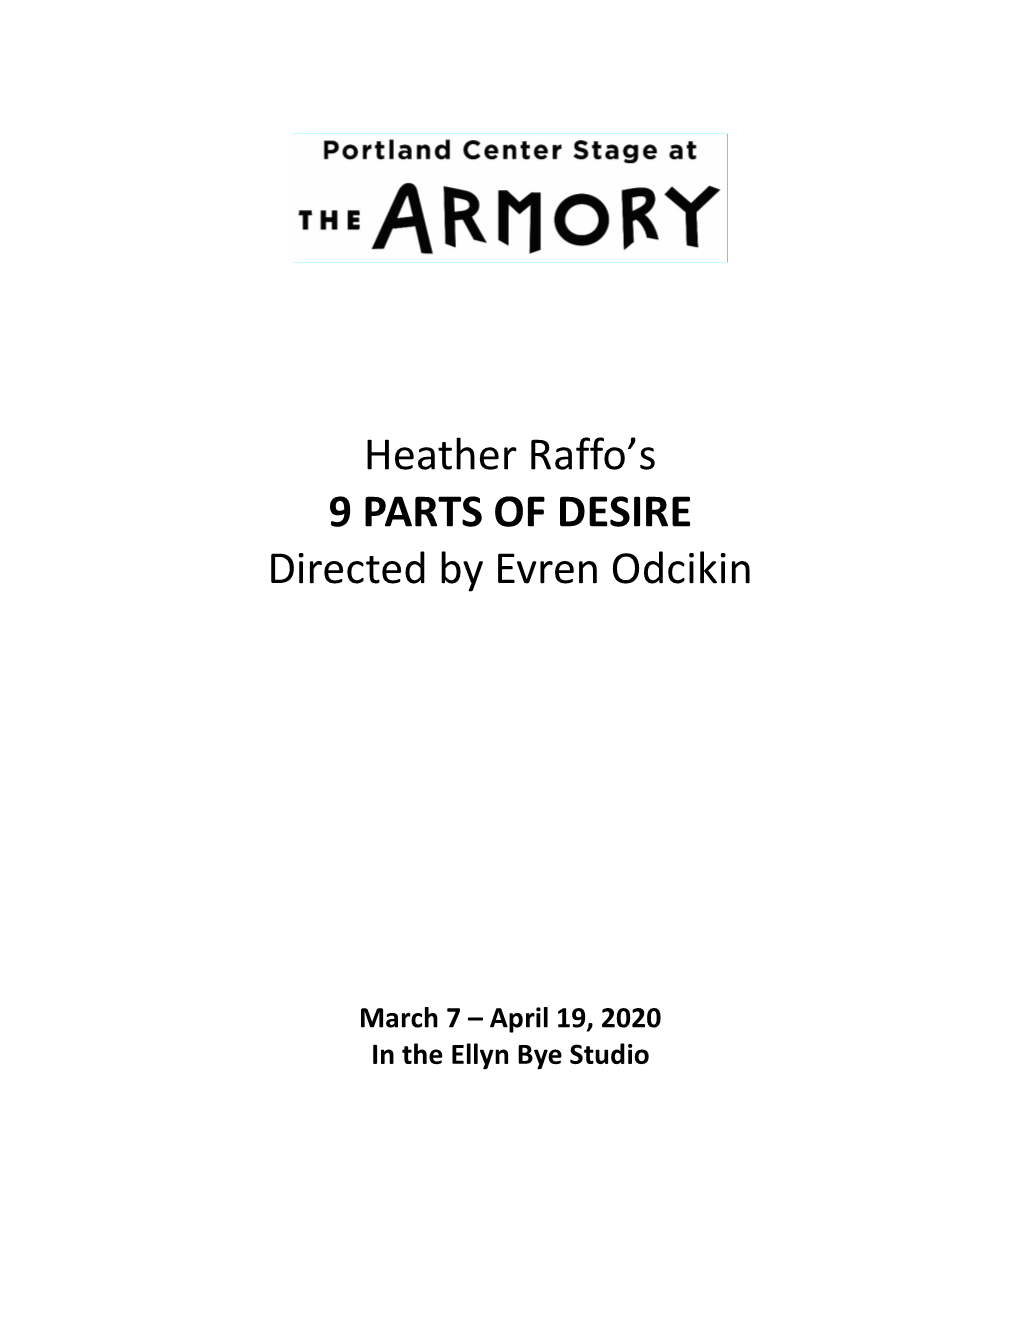 Heather Raffo's 9 PARTS of DESIRE Directed by Evren Odcikin